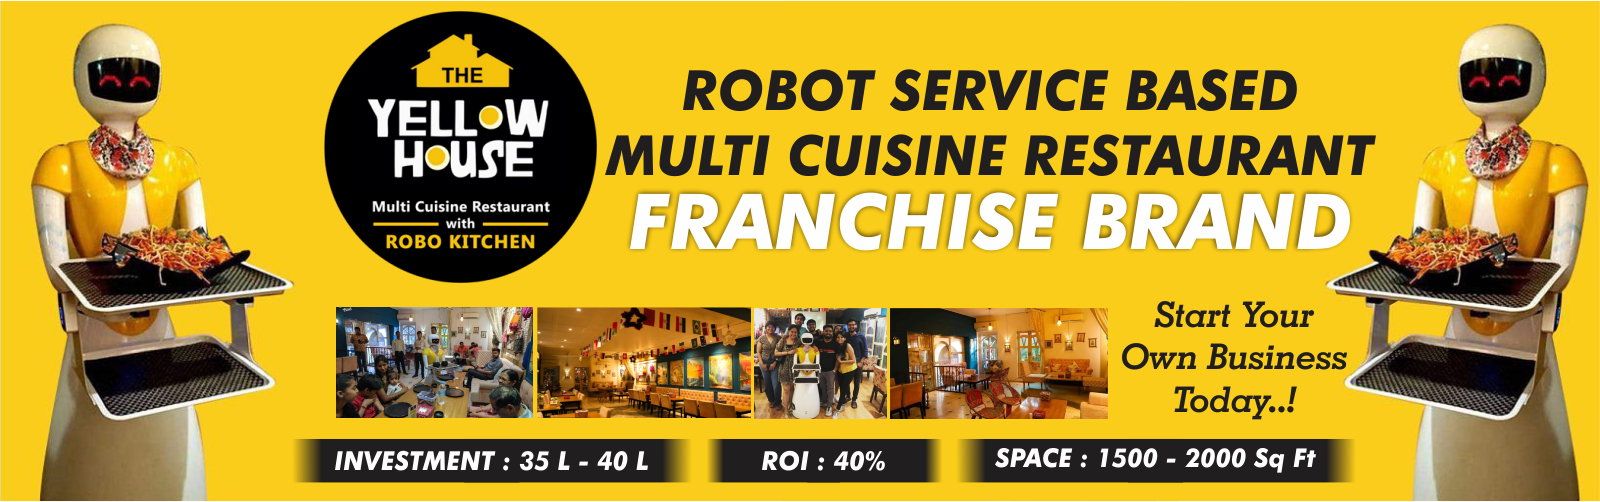 admin/uploads/brand_registration/The Yellow House Robot Restaurant